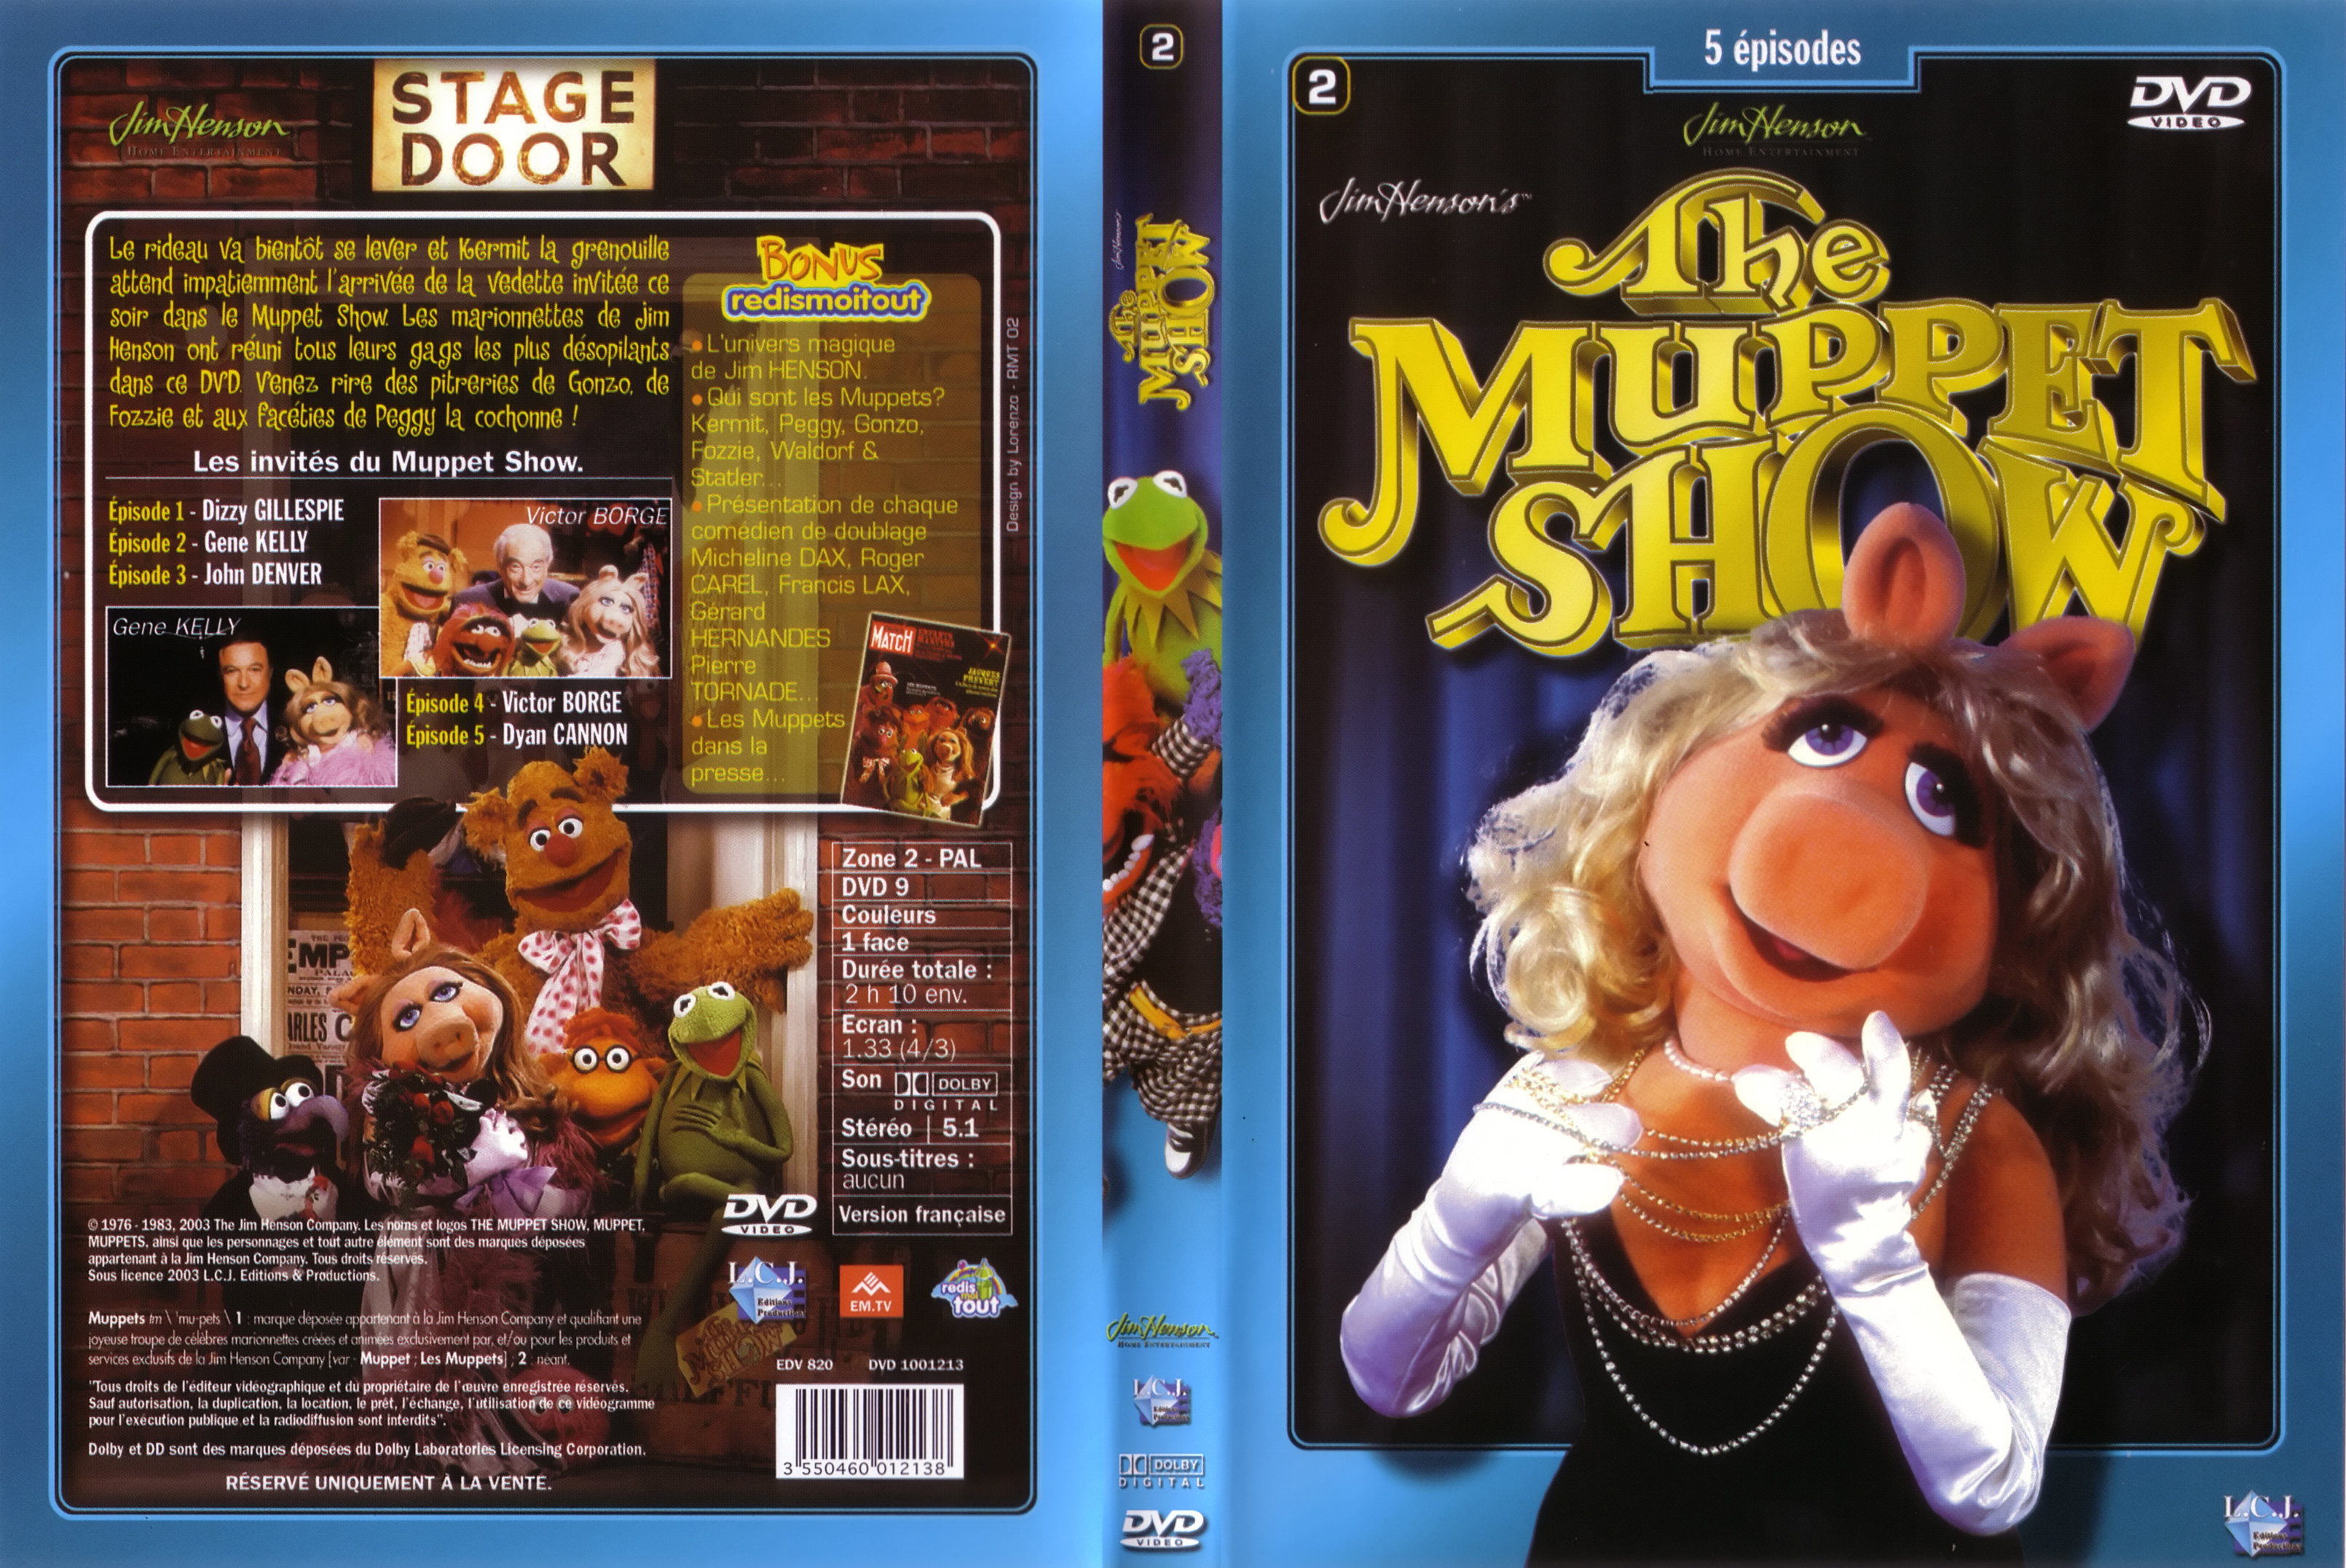 Jaquette DVD The muppet show vol 2 DVD 2